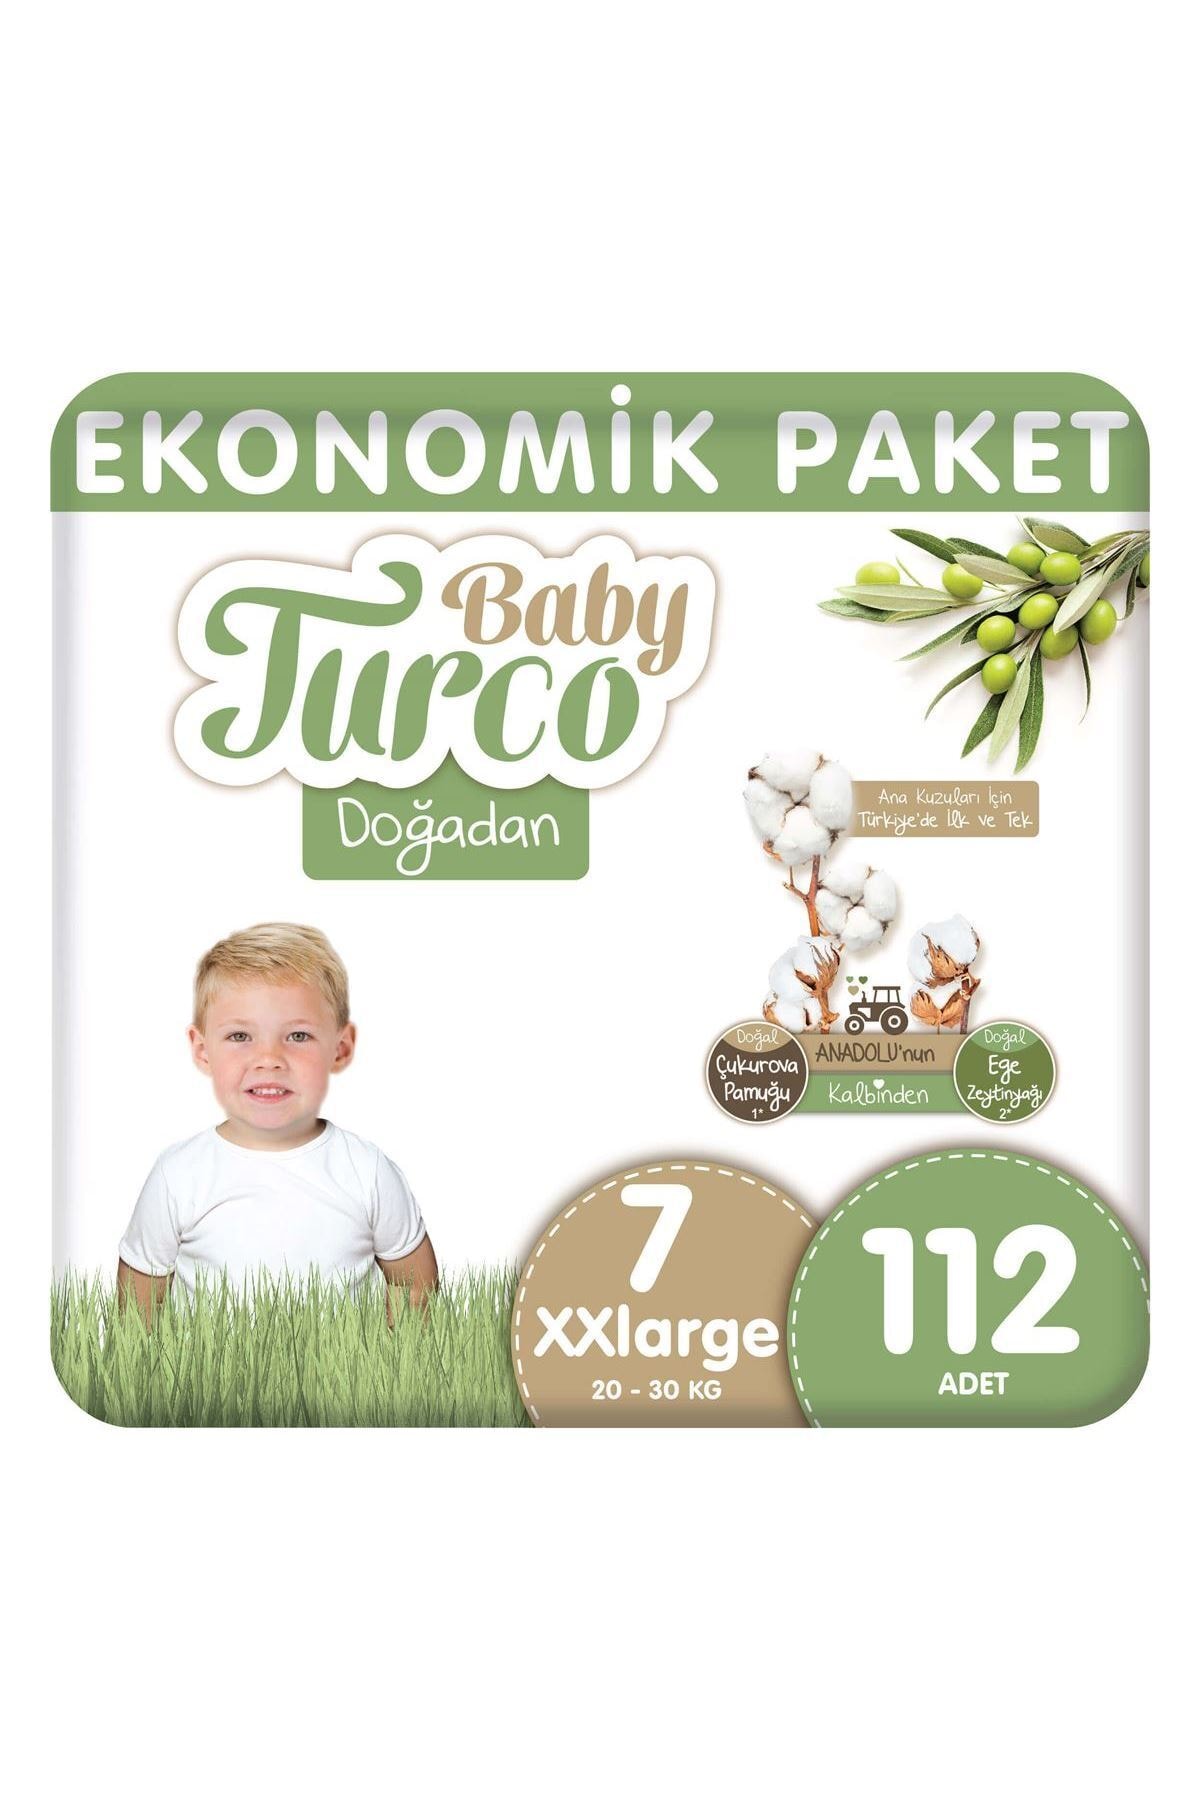 Baby Turco Doğadan Bebek Bezi Ekonomik Paket Xxlarge 7 Numara 112 Adet